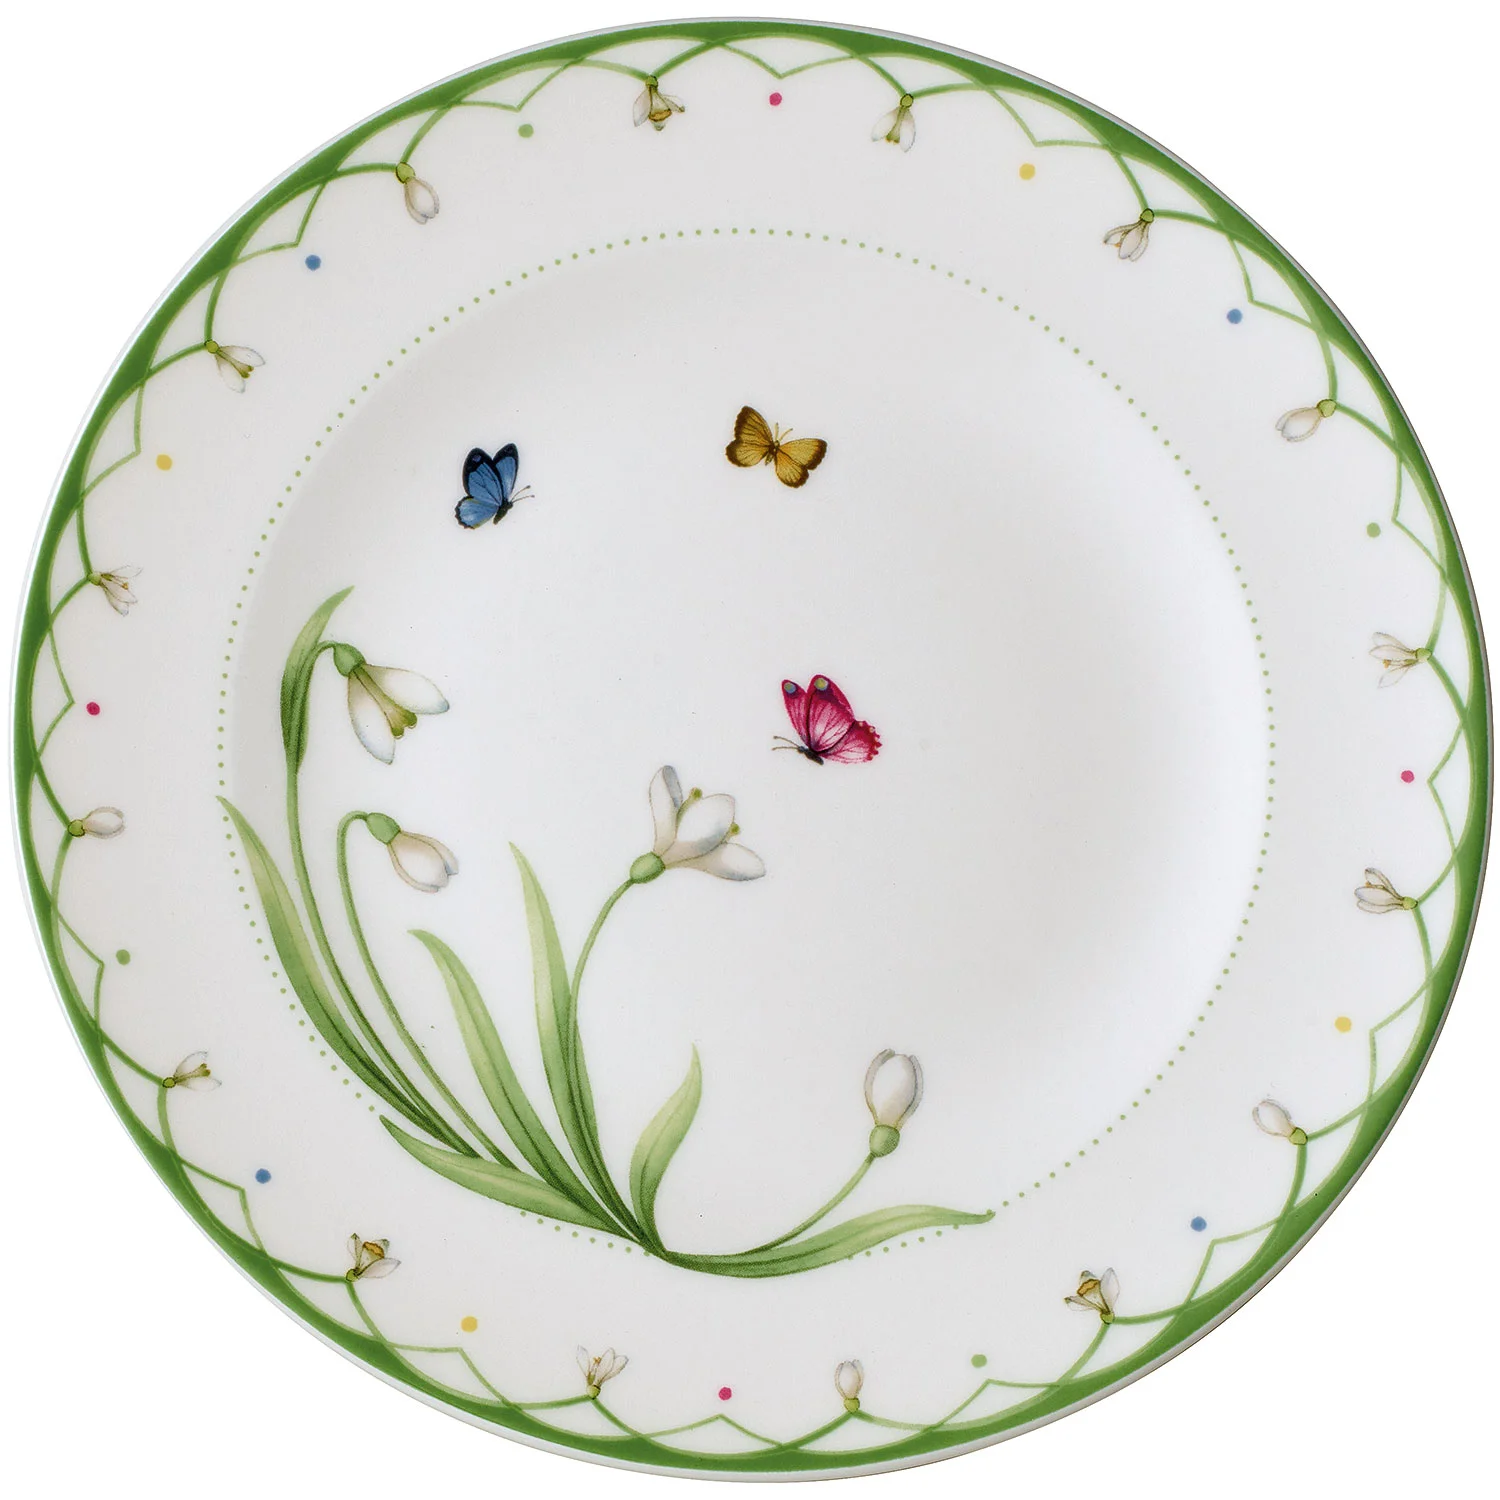 Colourful Spring Салатная тарелка 22 см